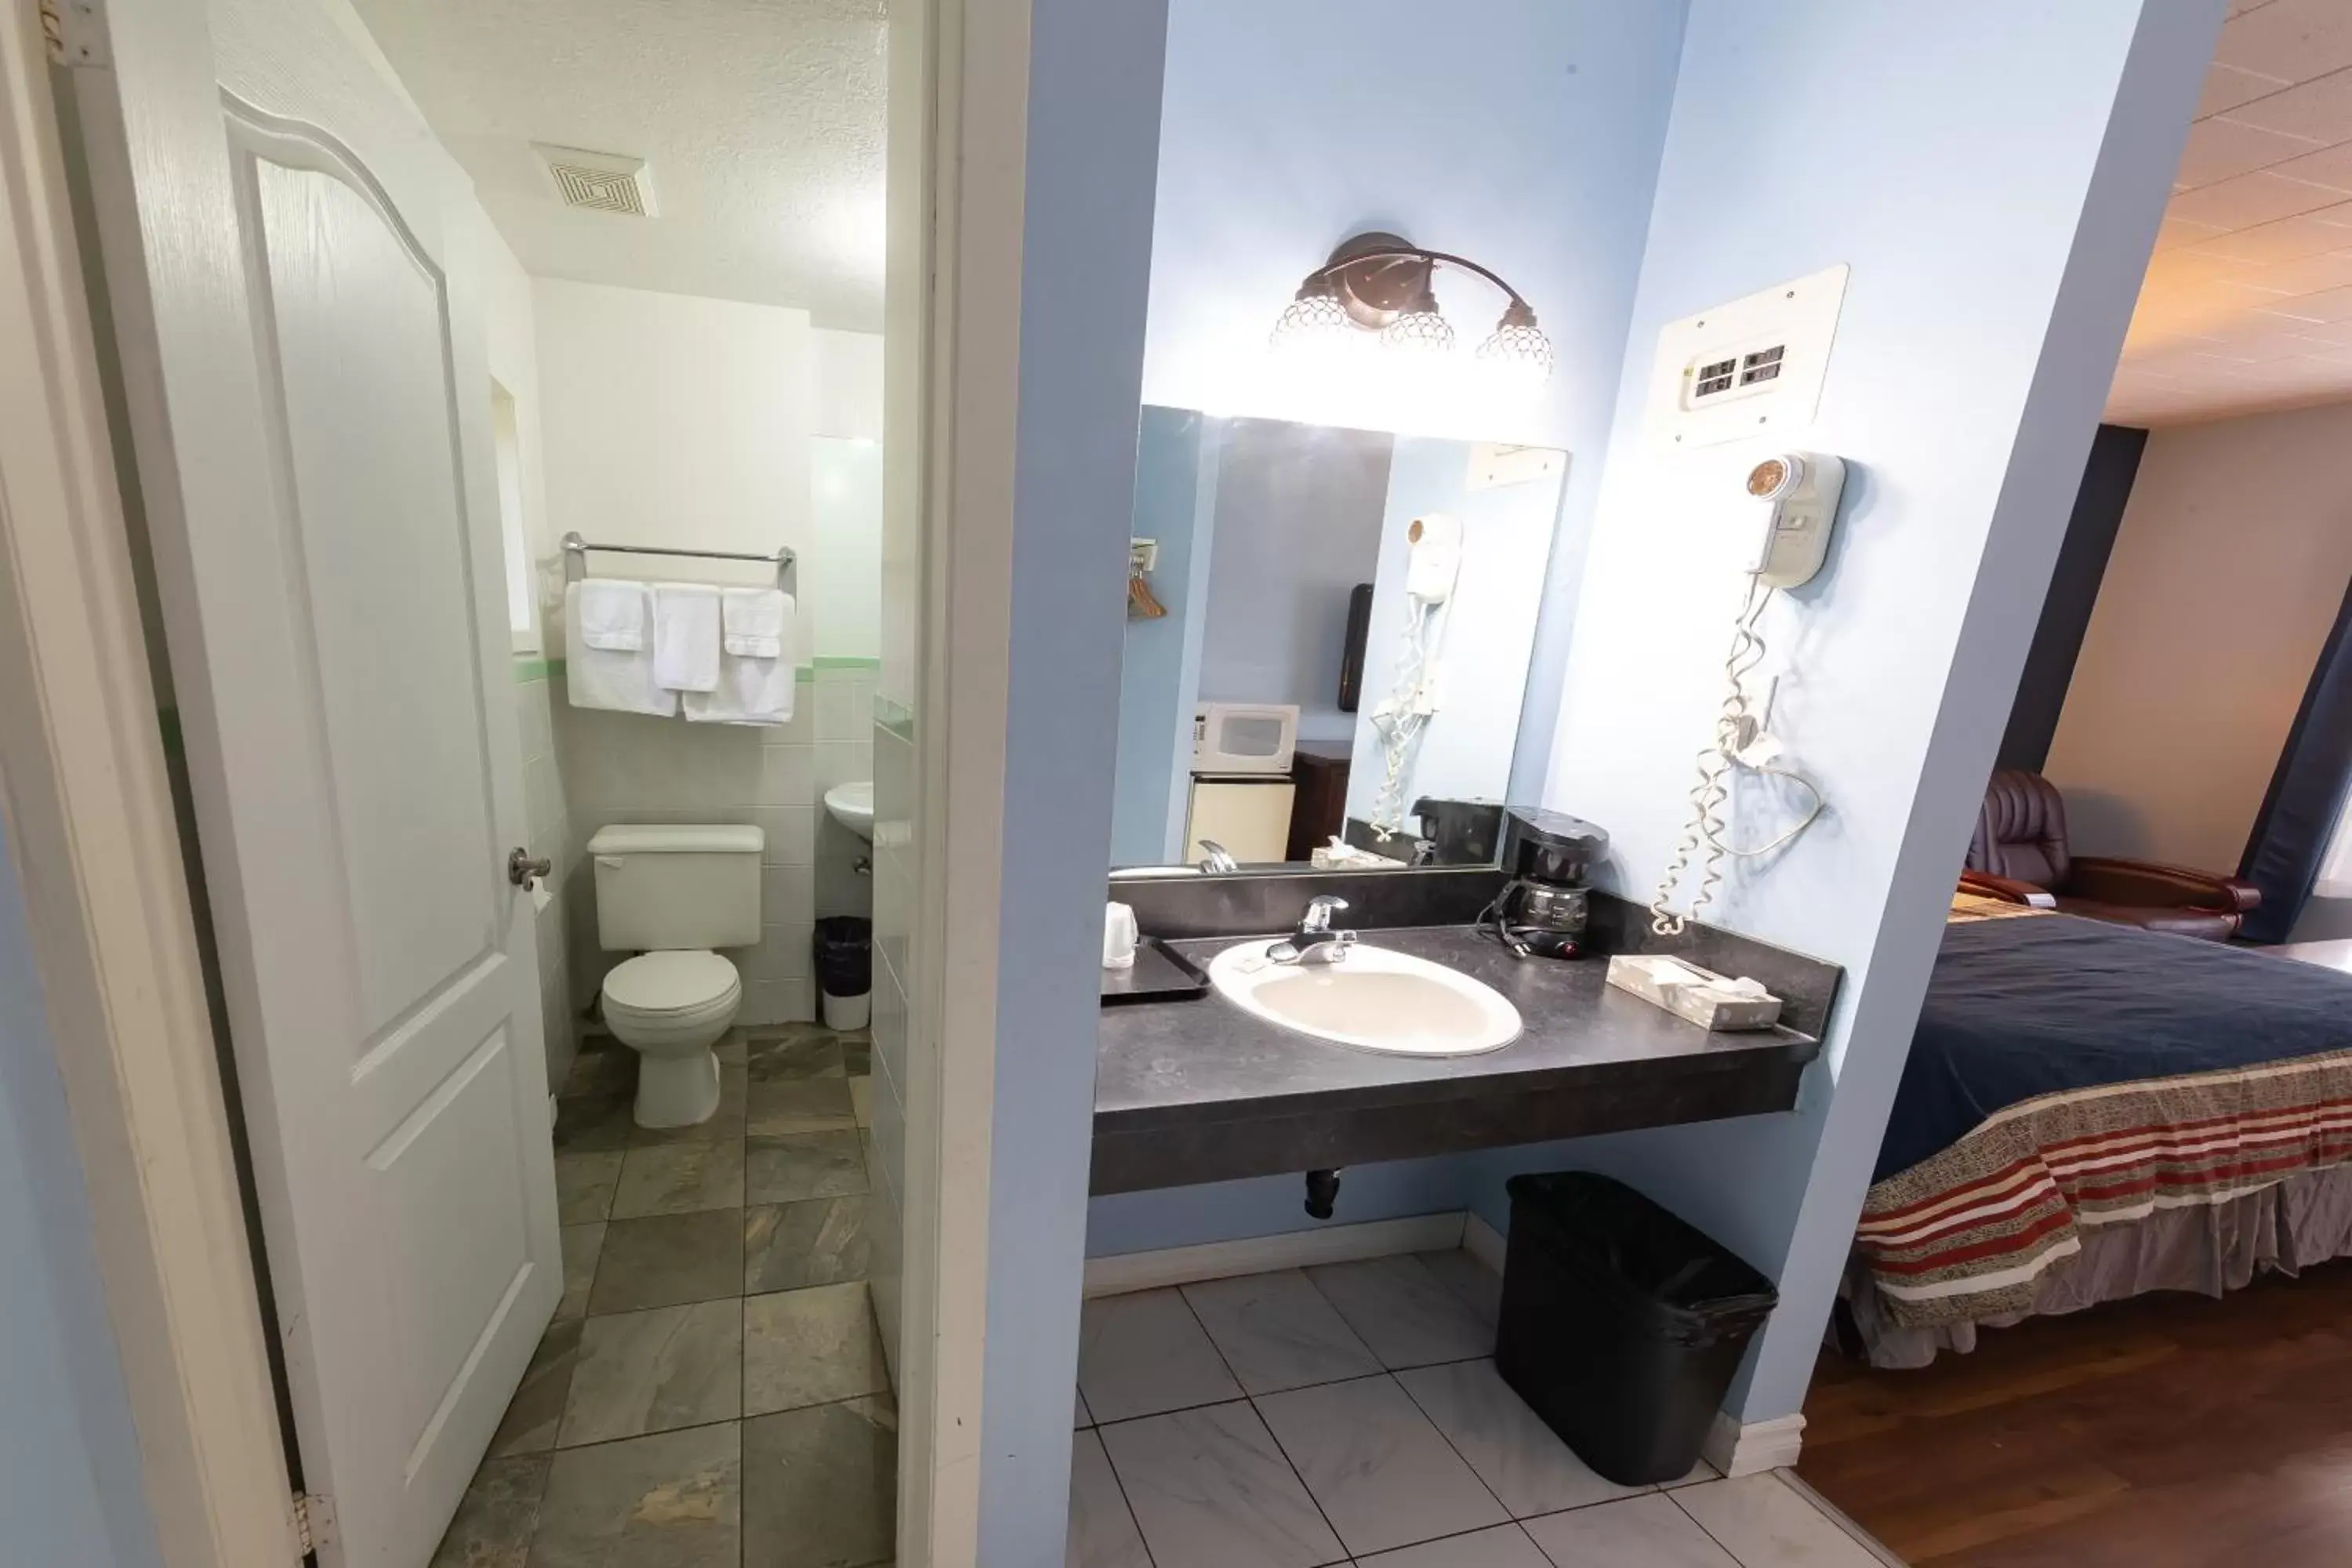 Bathroom in Villager Lodge Niagara Falls